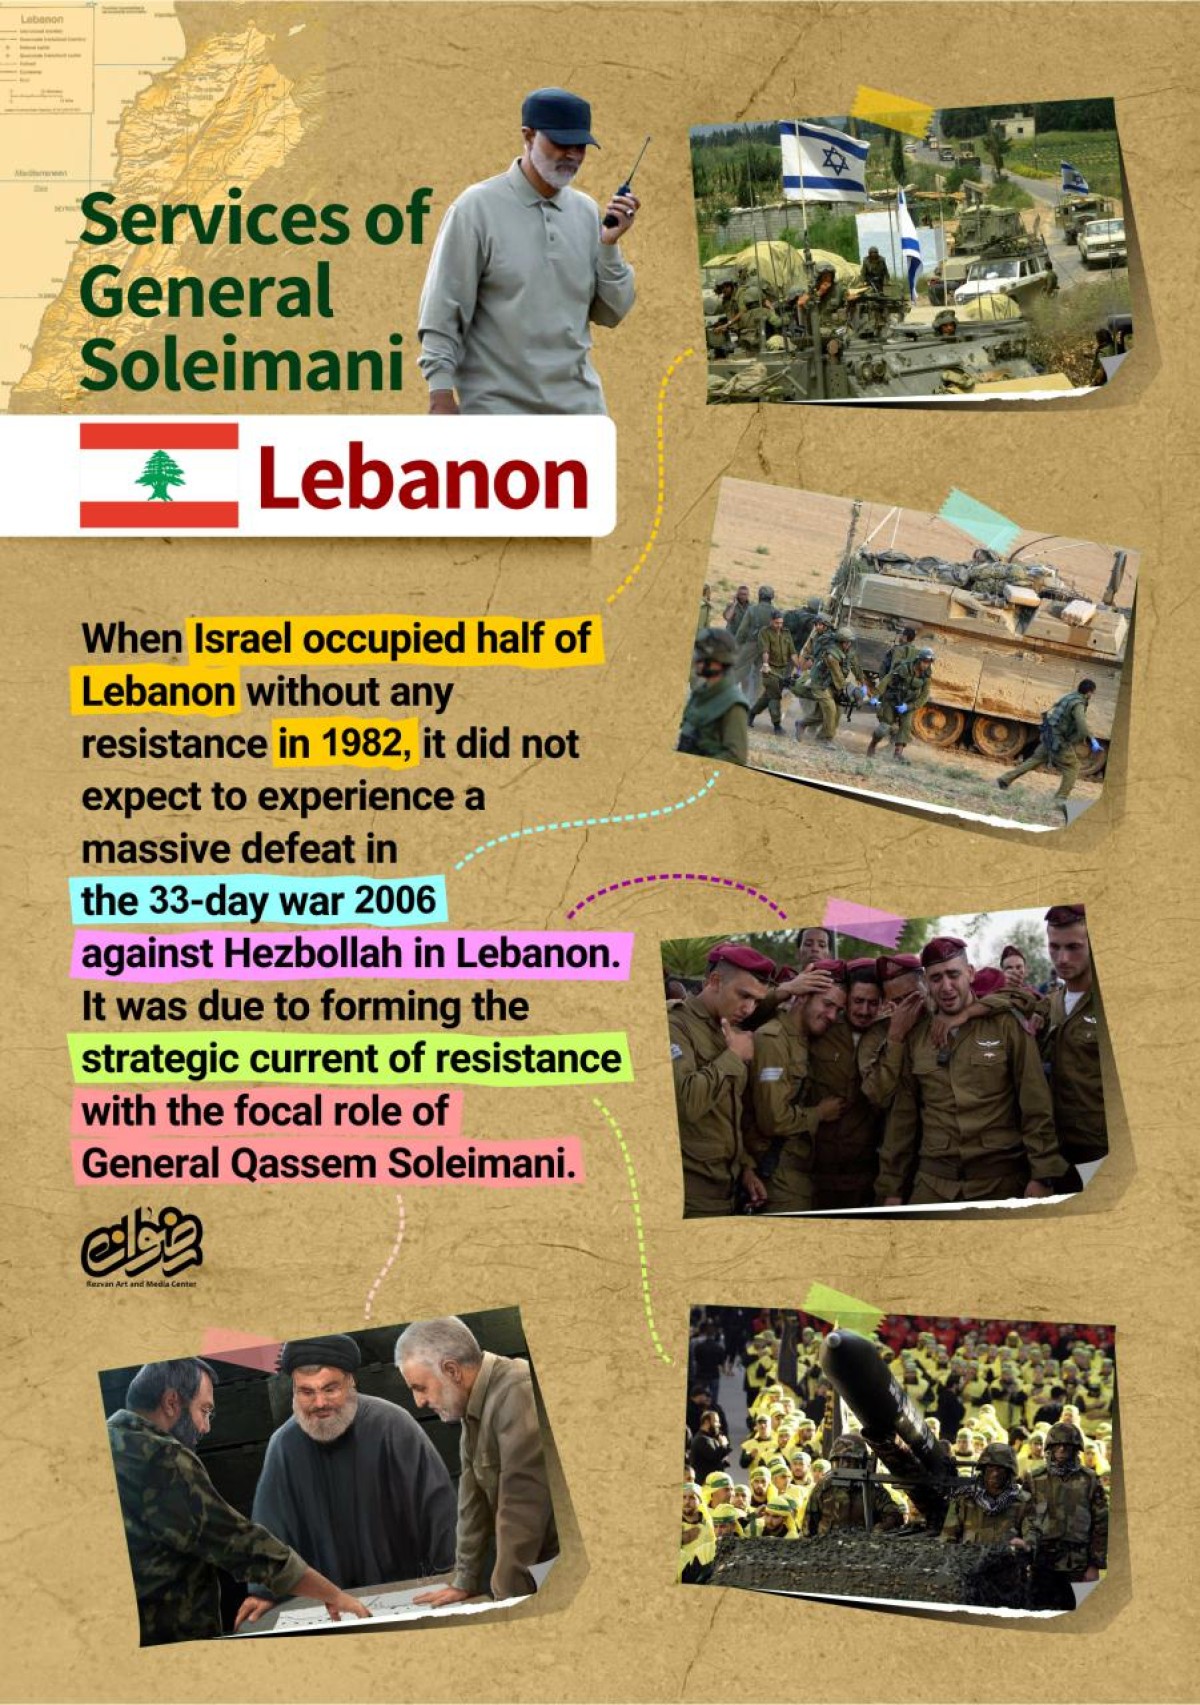 Services of General Soleimani: Lebanon